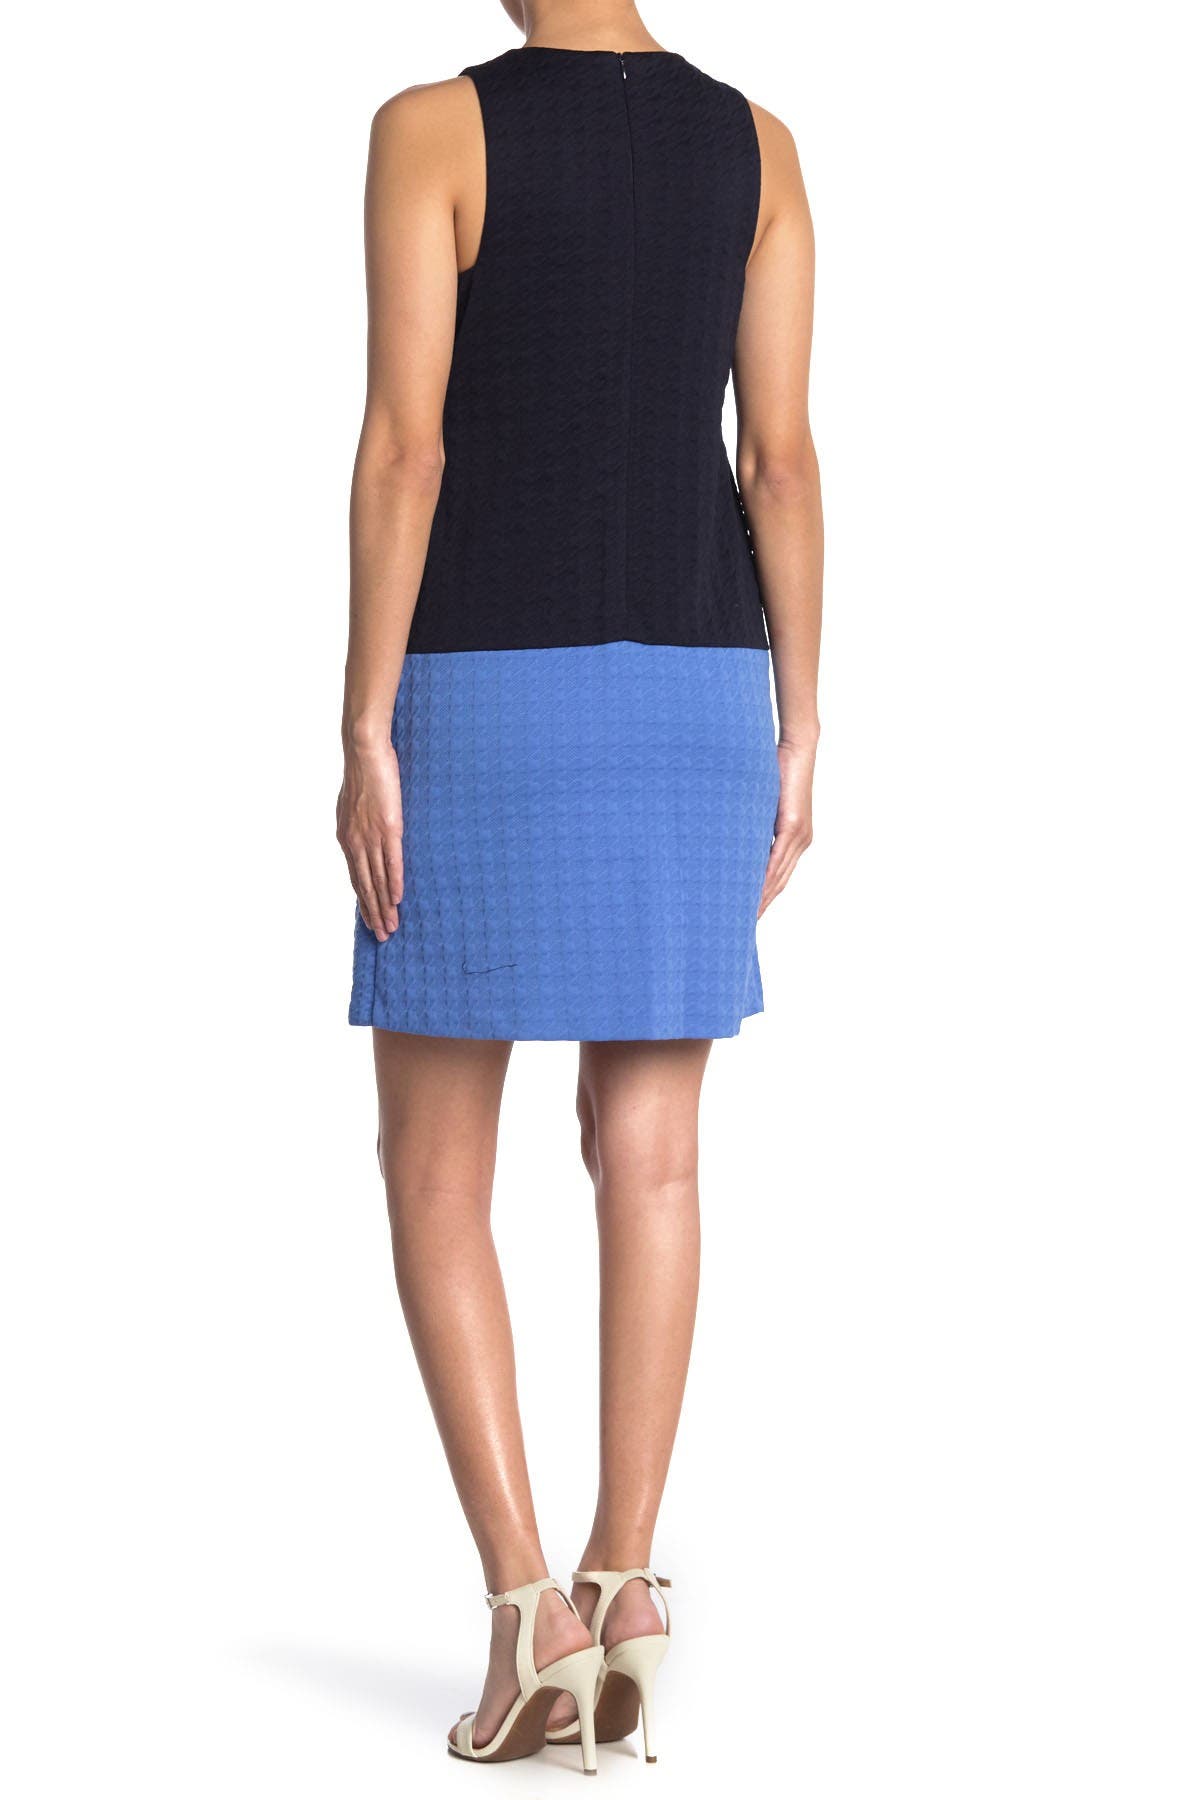 Eliza J Sleeveless Colorblock Shift Dress In Medium Blue1